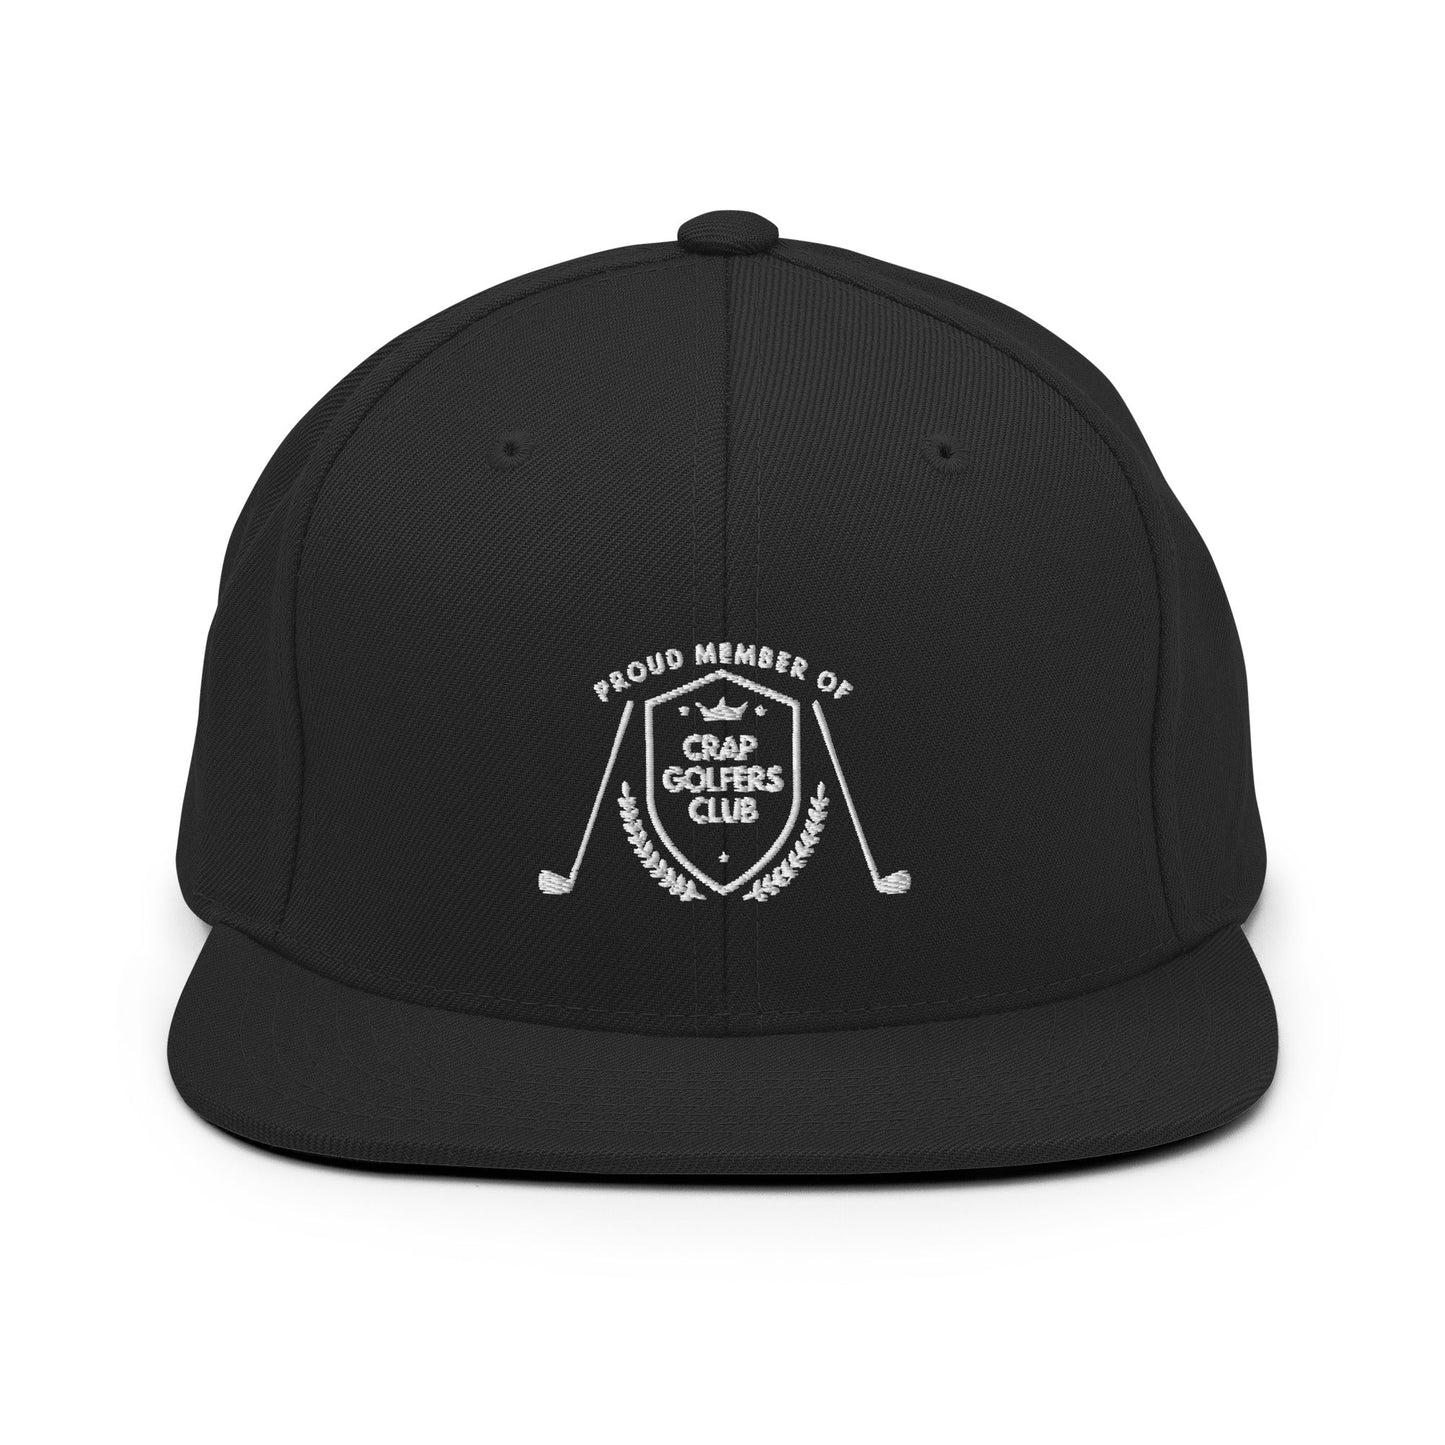 Funny Golfer Gifts  Snapback Hat Black Crap Golfers Club Snapback Hat